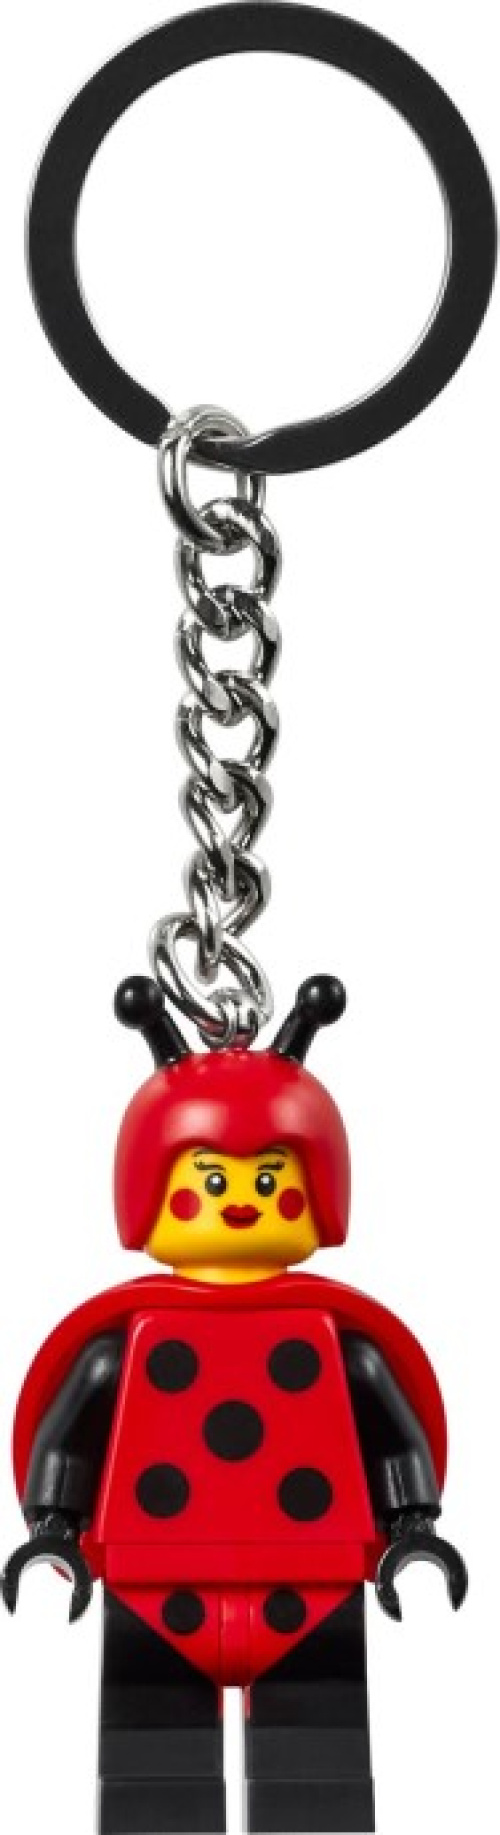 854157-1 Ladybird Girl Key Chain